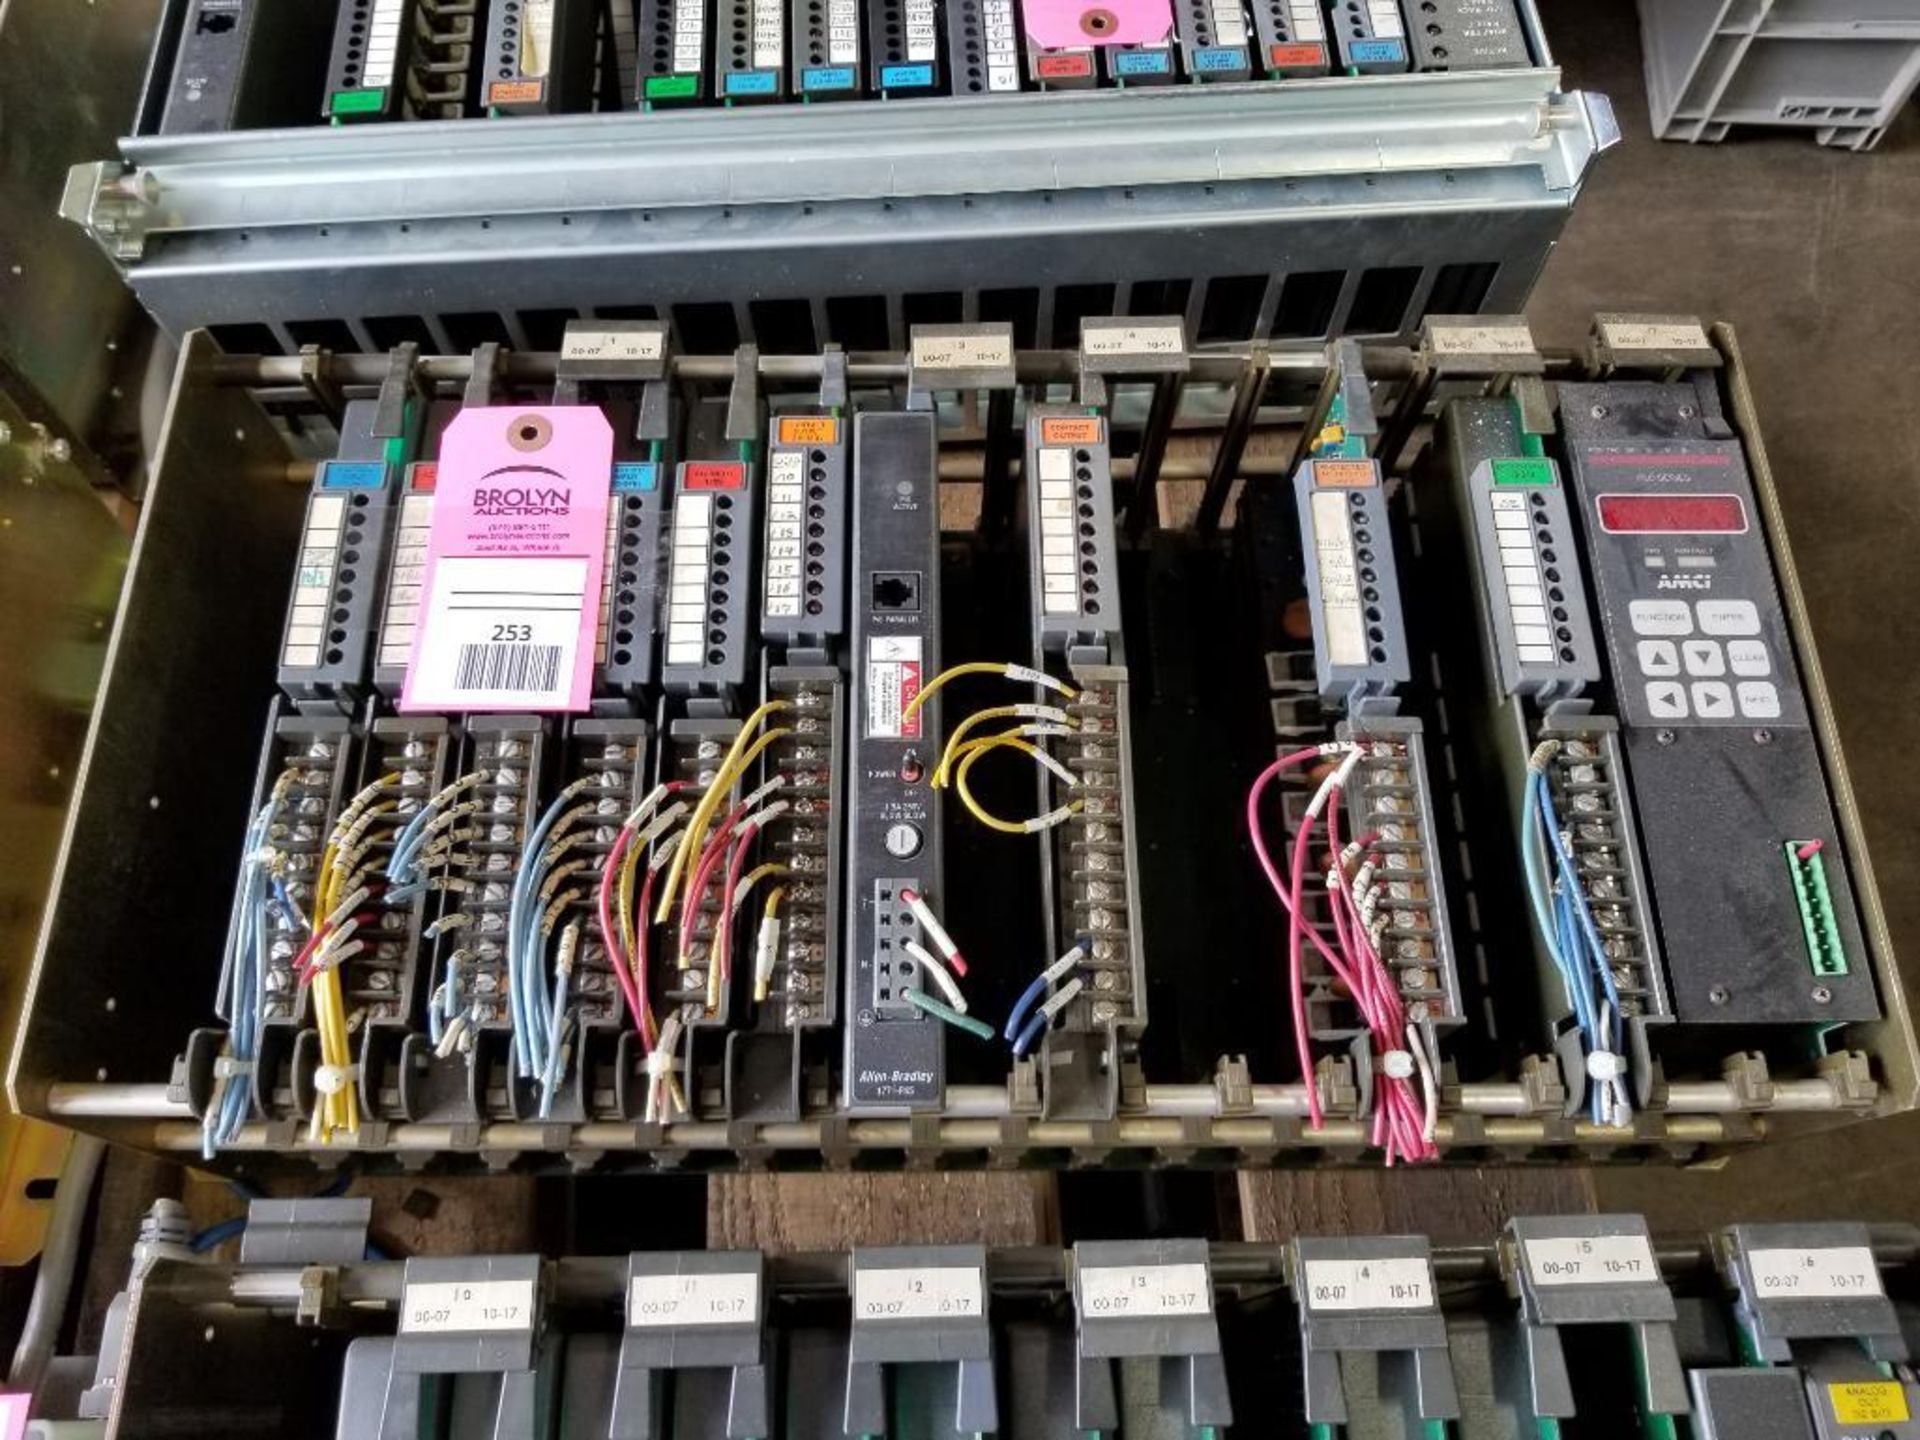 Allen Bradley PLC rack as pictured.